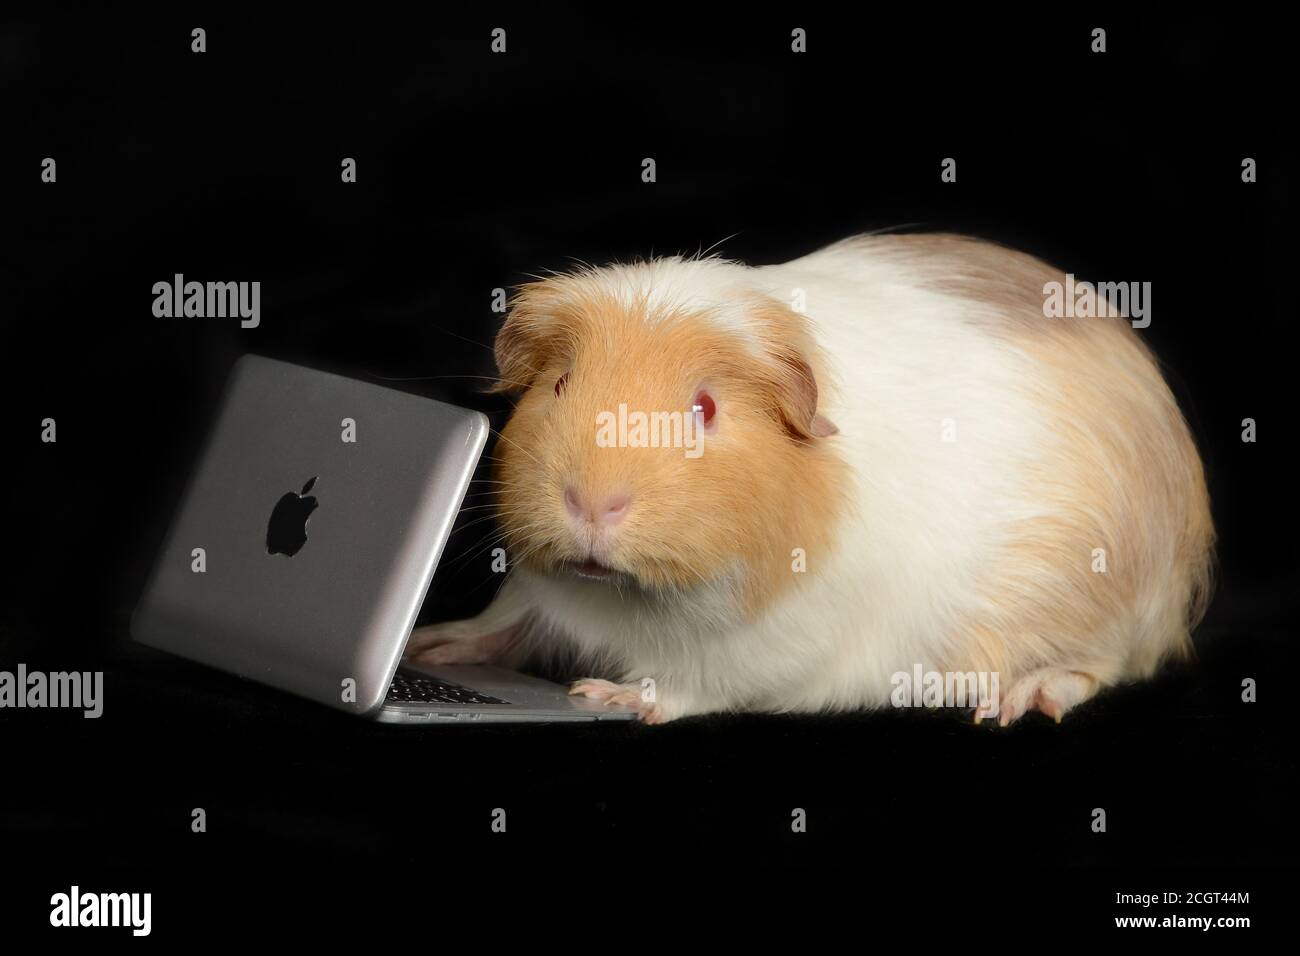 Guinea pig working on mac book Stock Photo